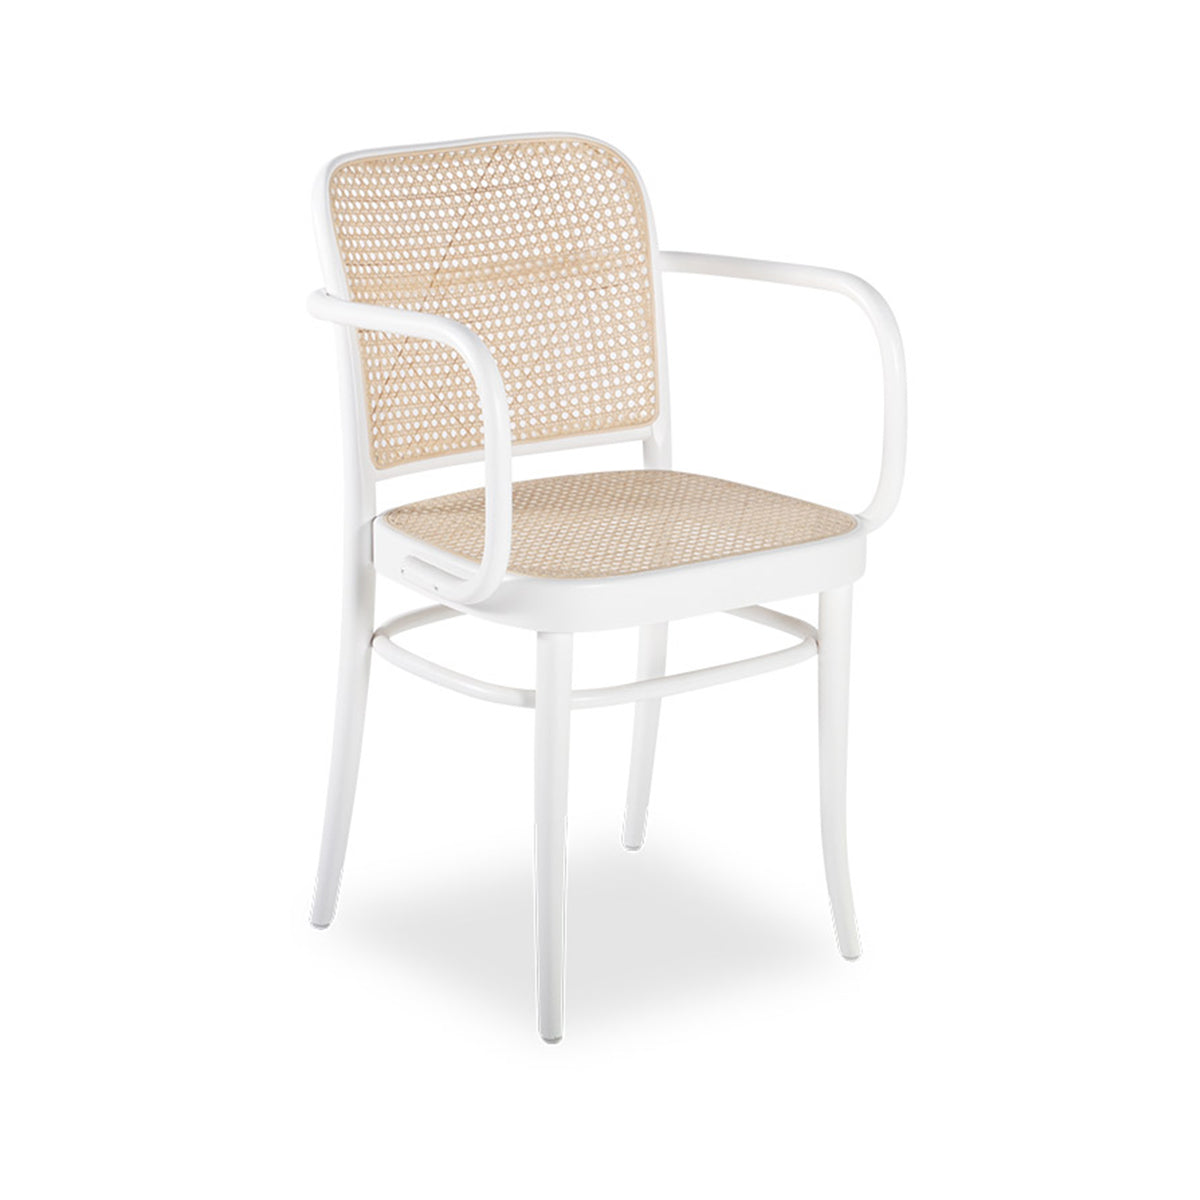 811 Hoffmann Armchair - Cane Seat/Cane Backrest (White).